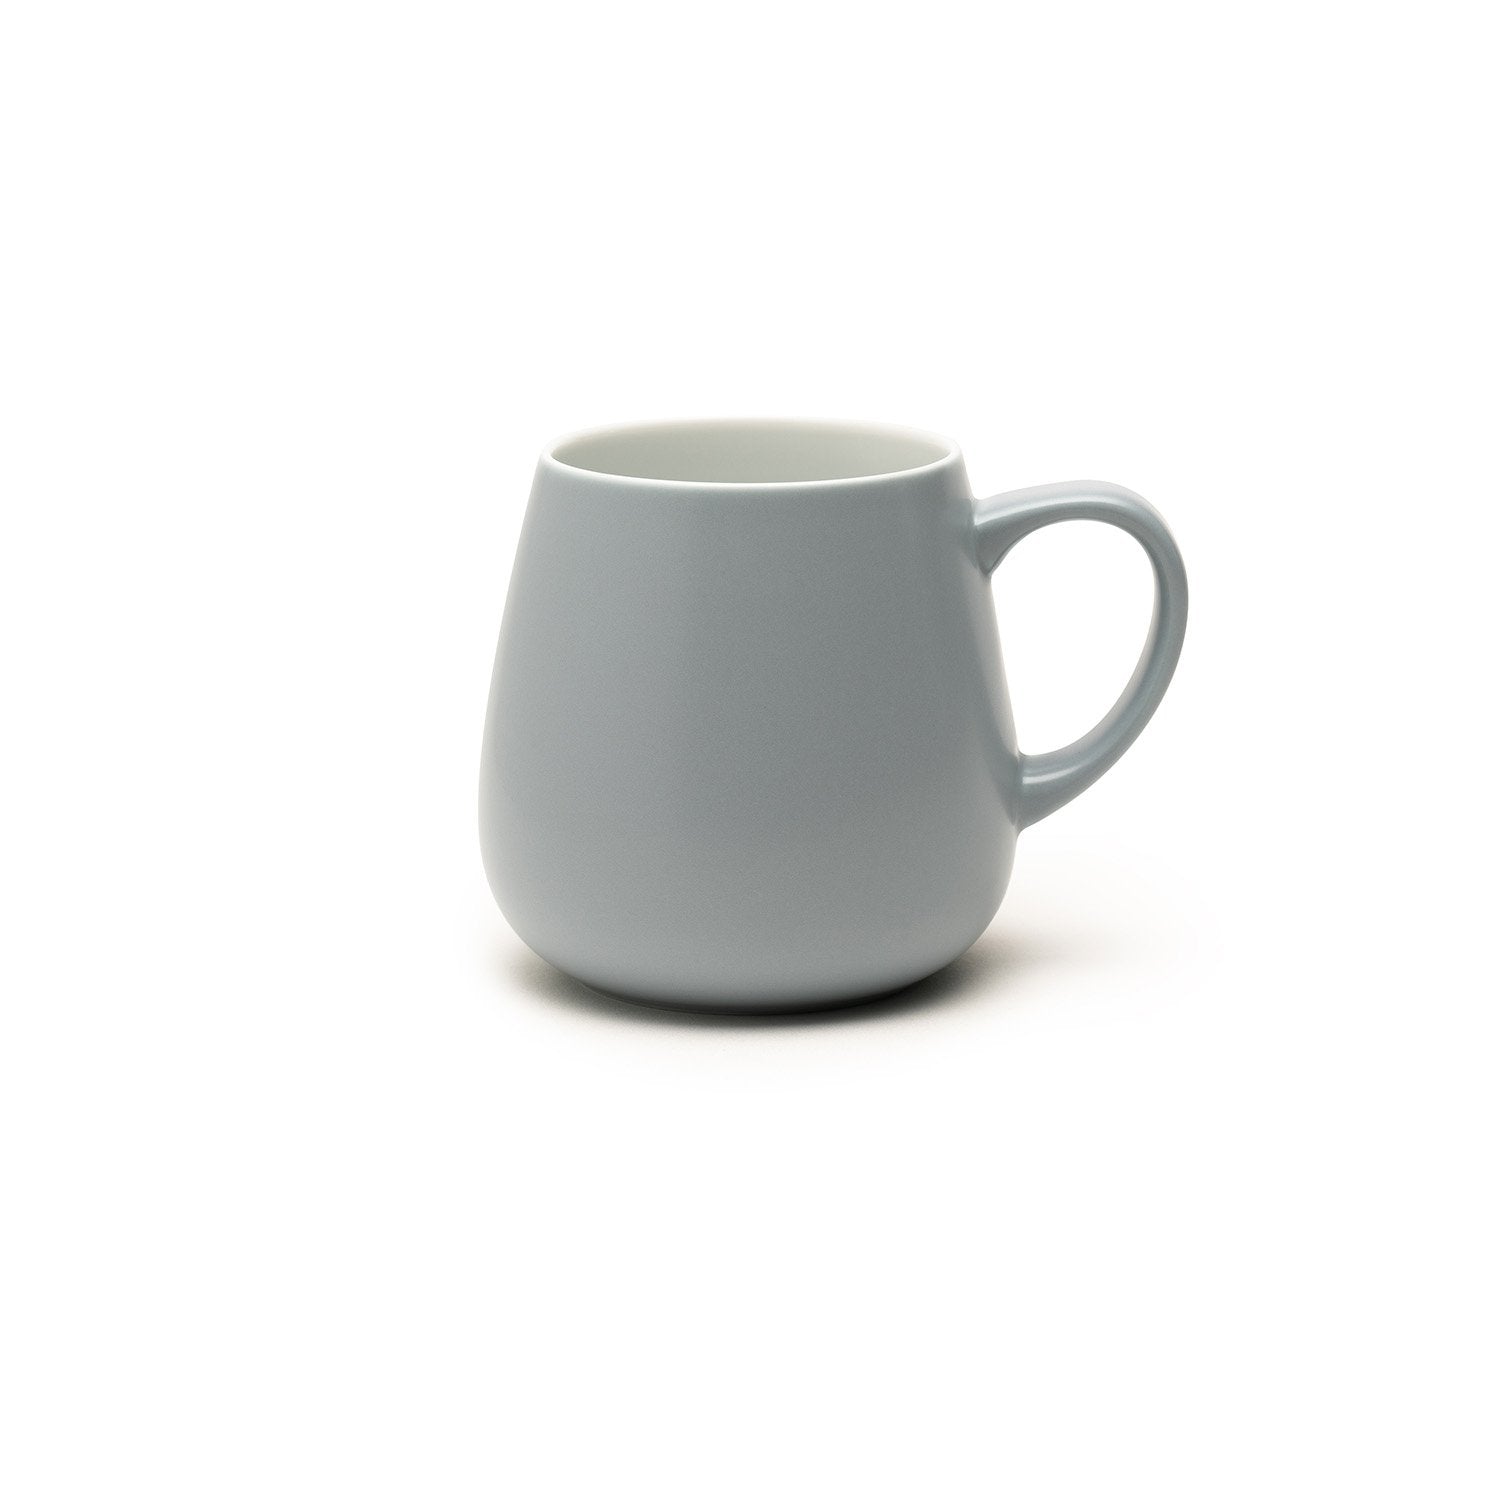 Large gray mug